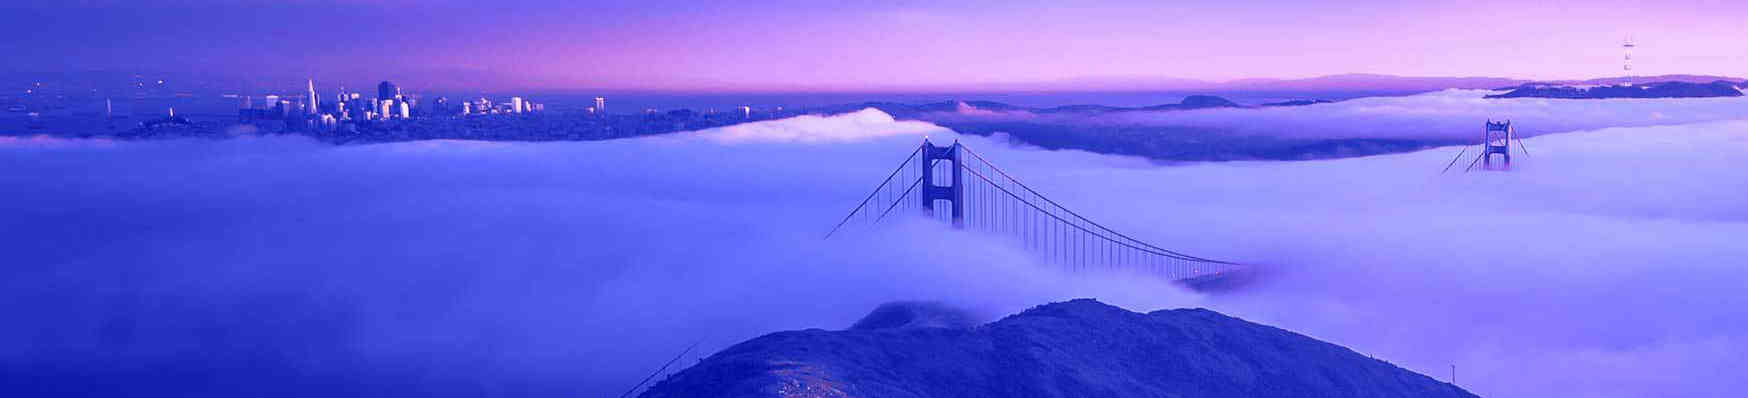 Foggy Golden Gate Bridge in San Francisco